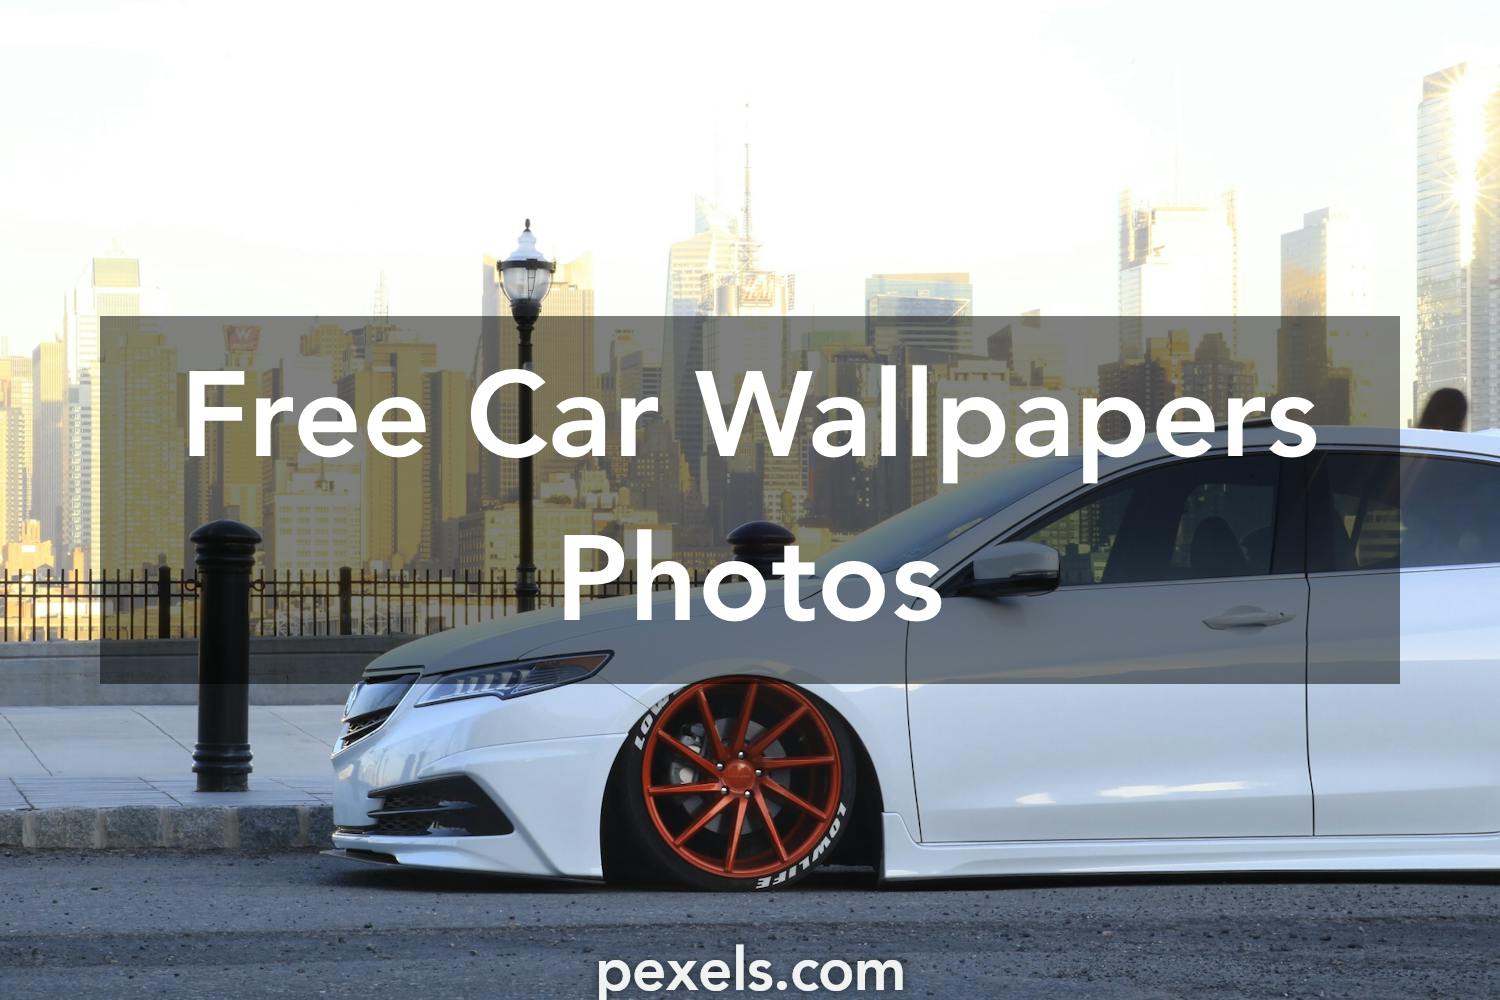 Car Wallpapers Pexels Free Stock Photos